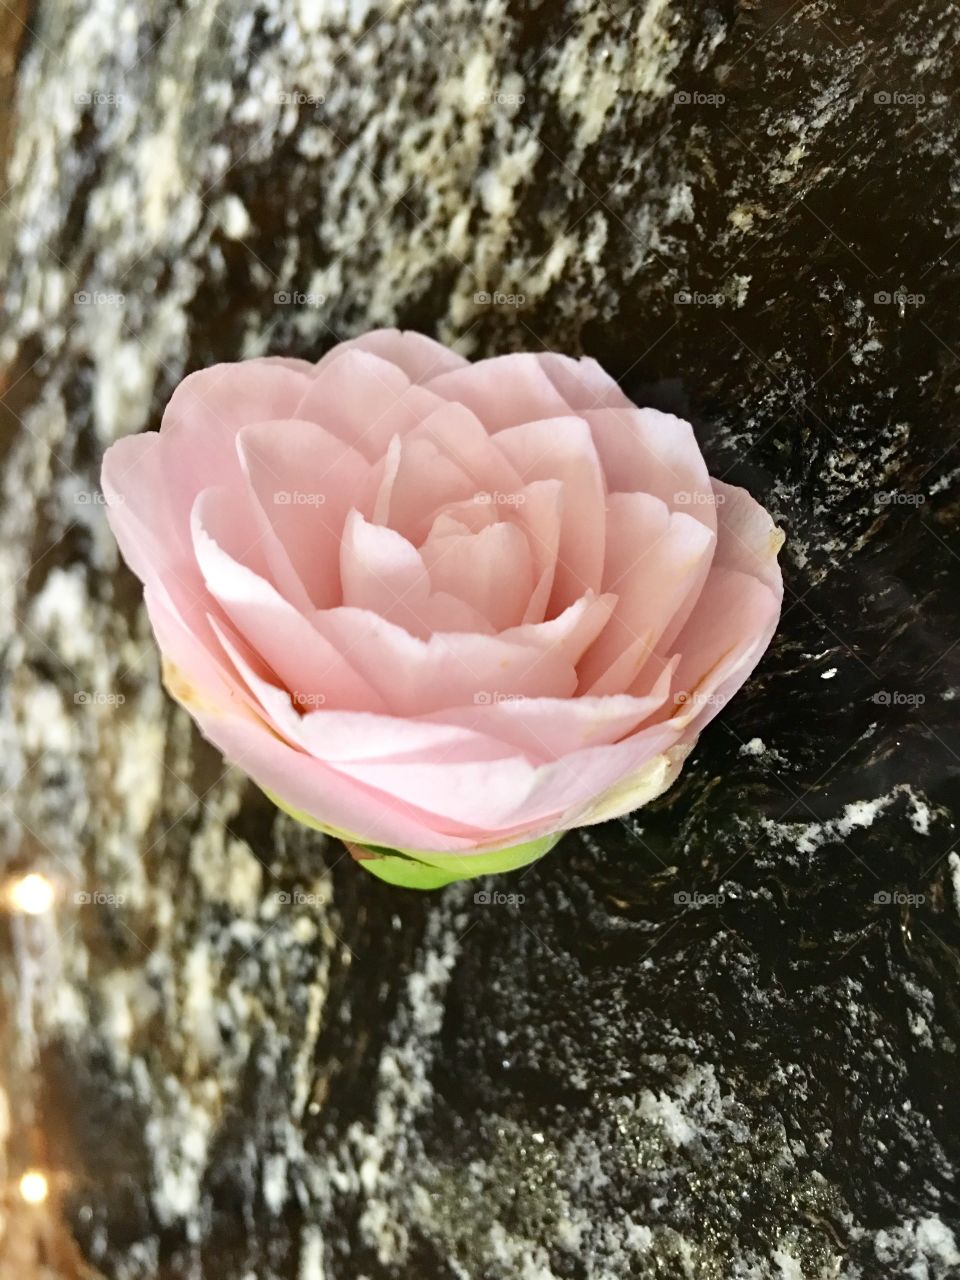 A beautiful rose early spring in Portland Oregon